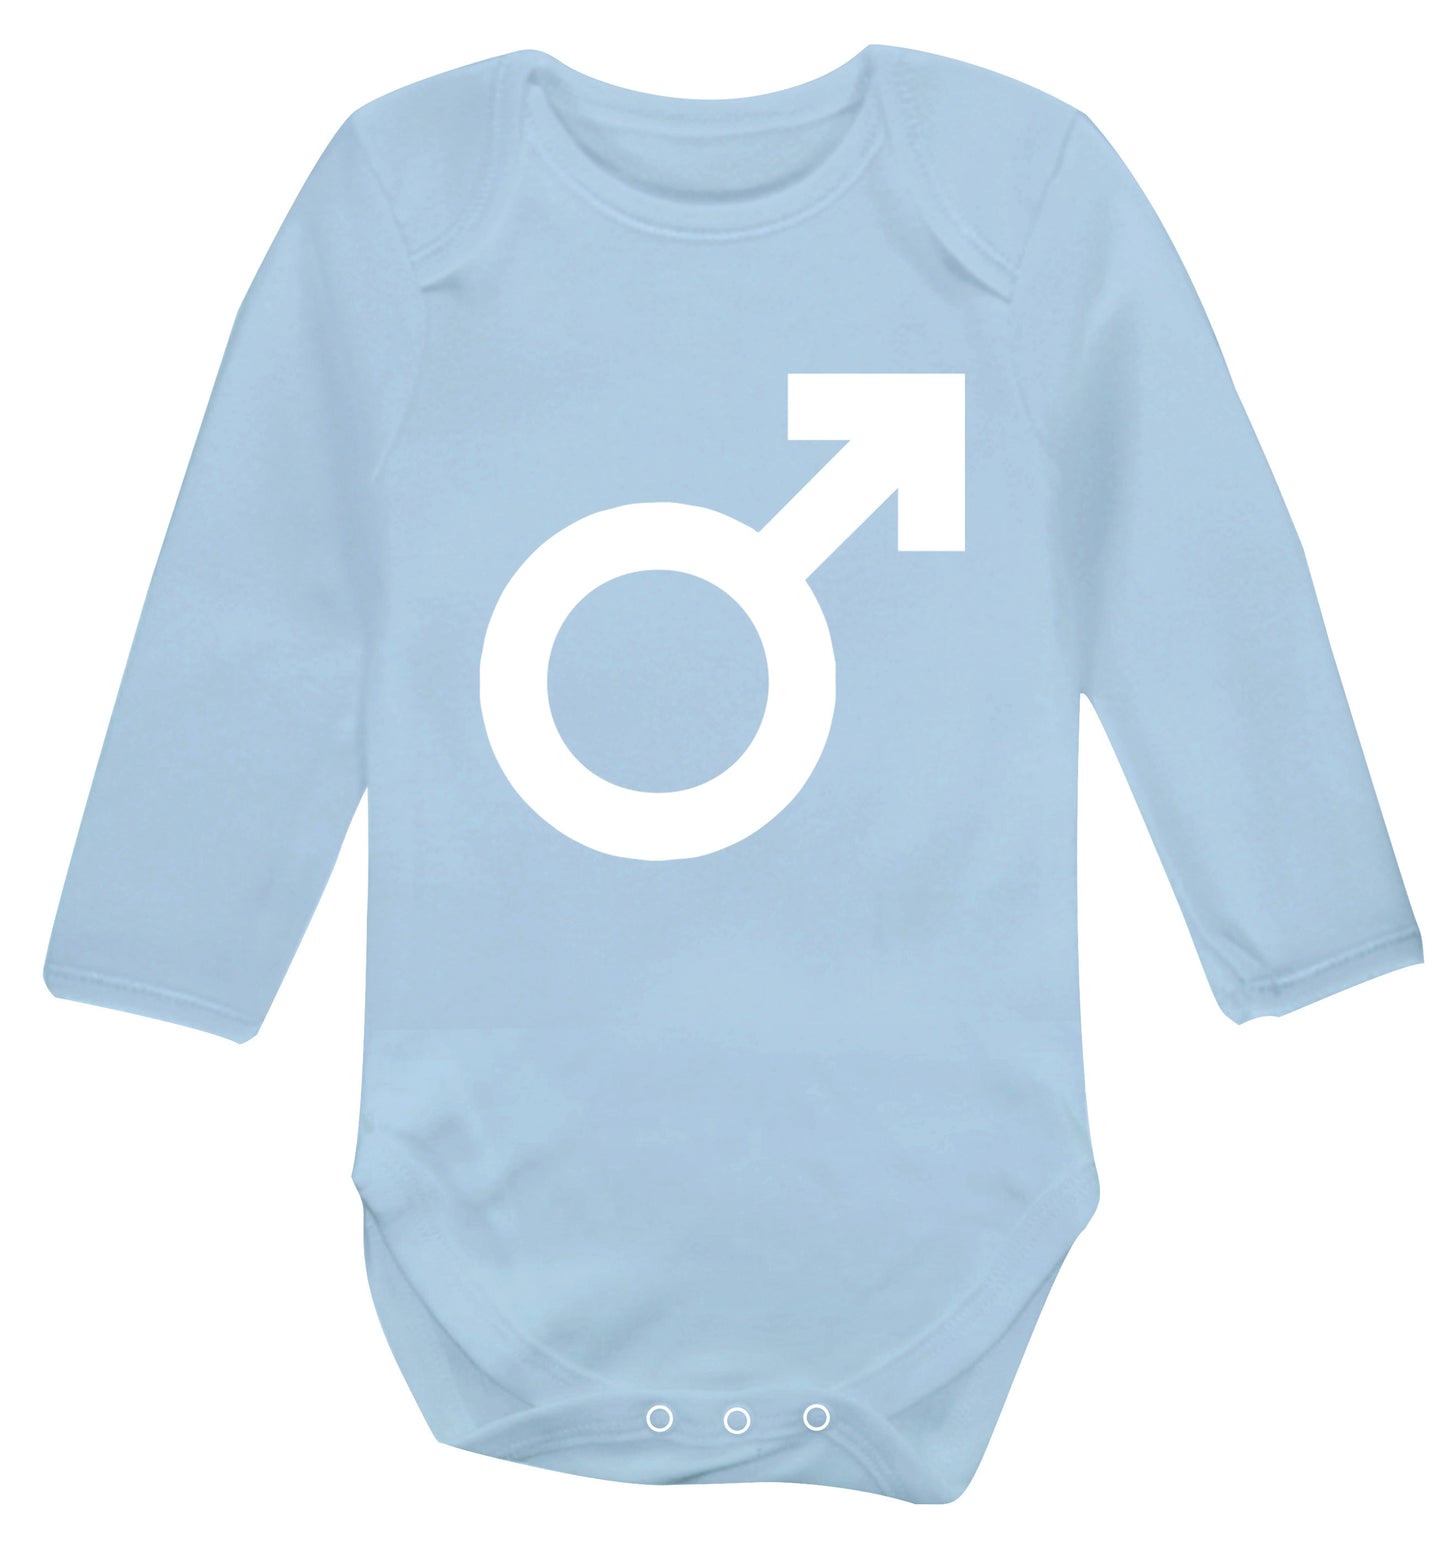 Male symbol large Baby Vest long sleeved pale blue 6-12 months